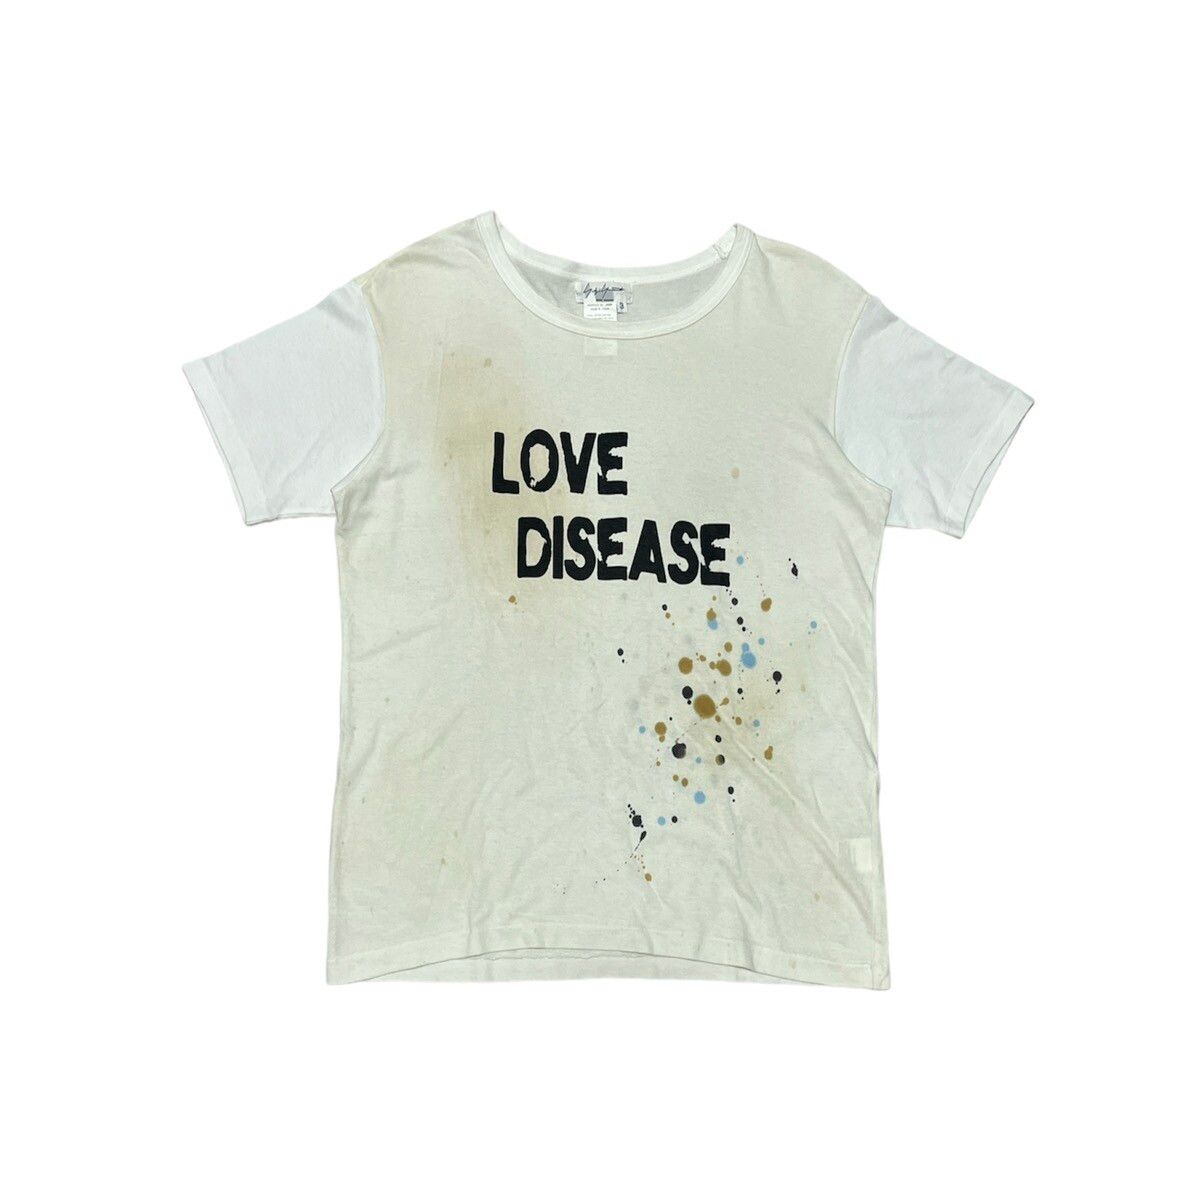 SS08 Yohji Yamamoto Pour Homme Love Disease T shirt - 2